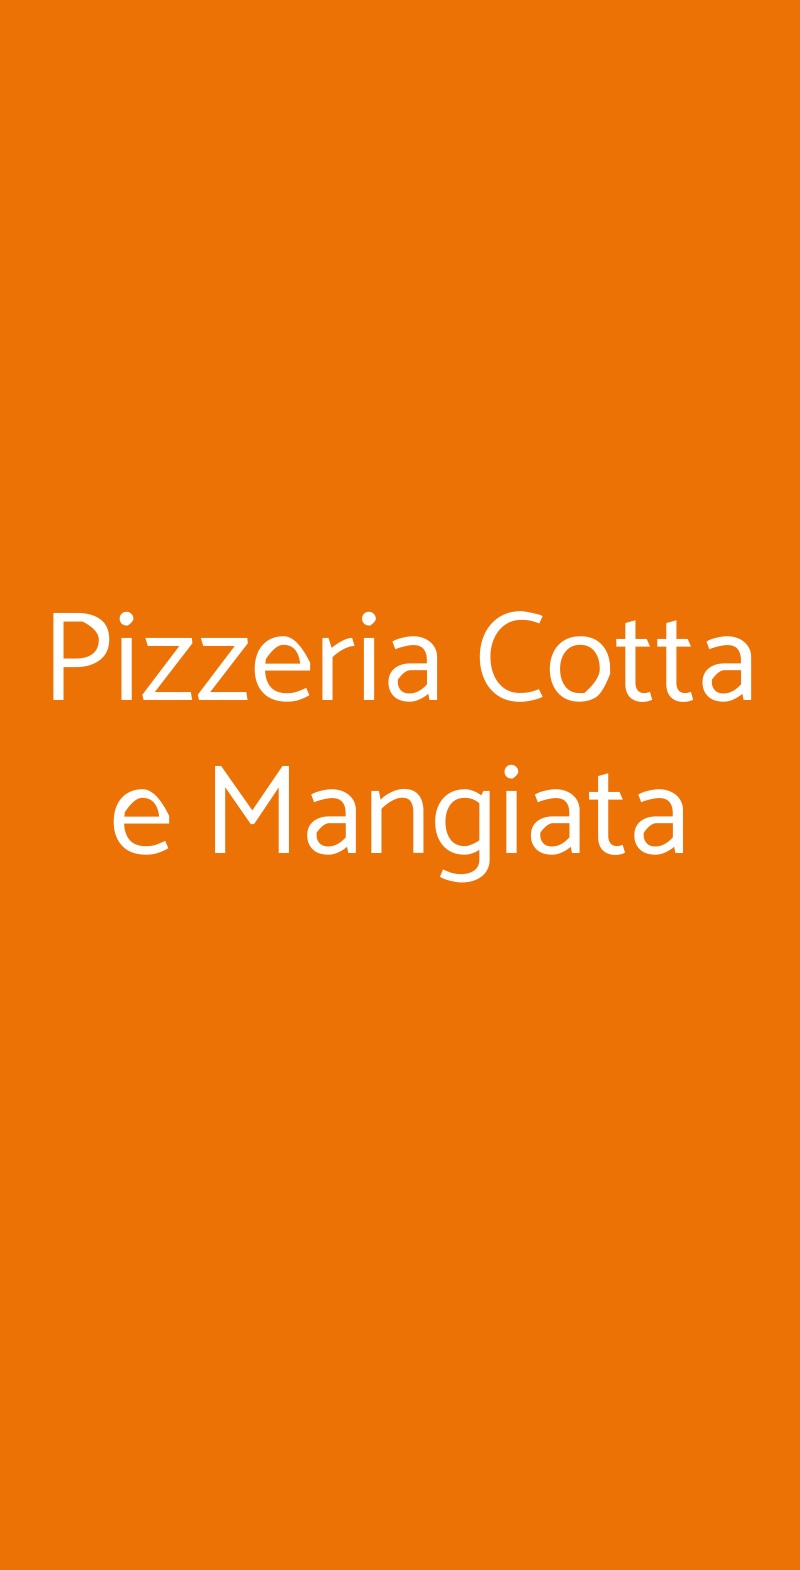 Pizzeria Cotta e Mangiata Roma menù 1 pagina